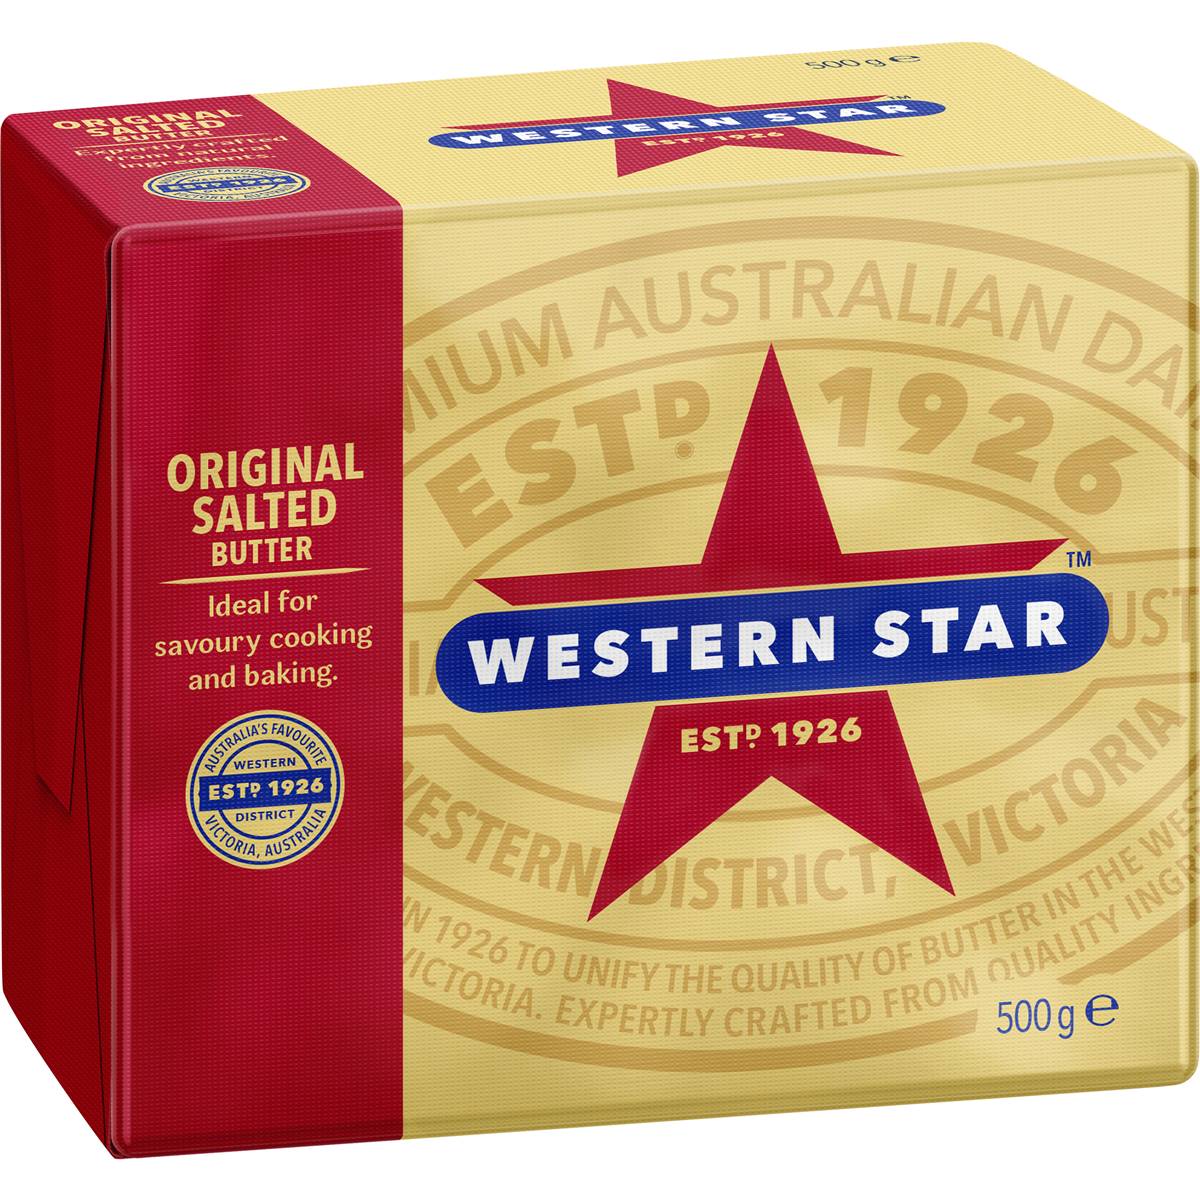 Calories in Western Star Original Butter Block